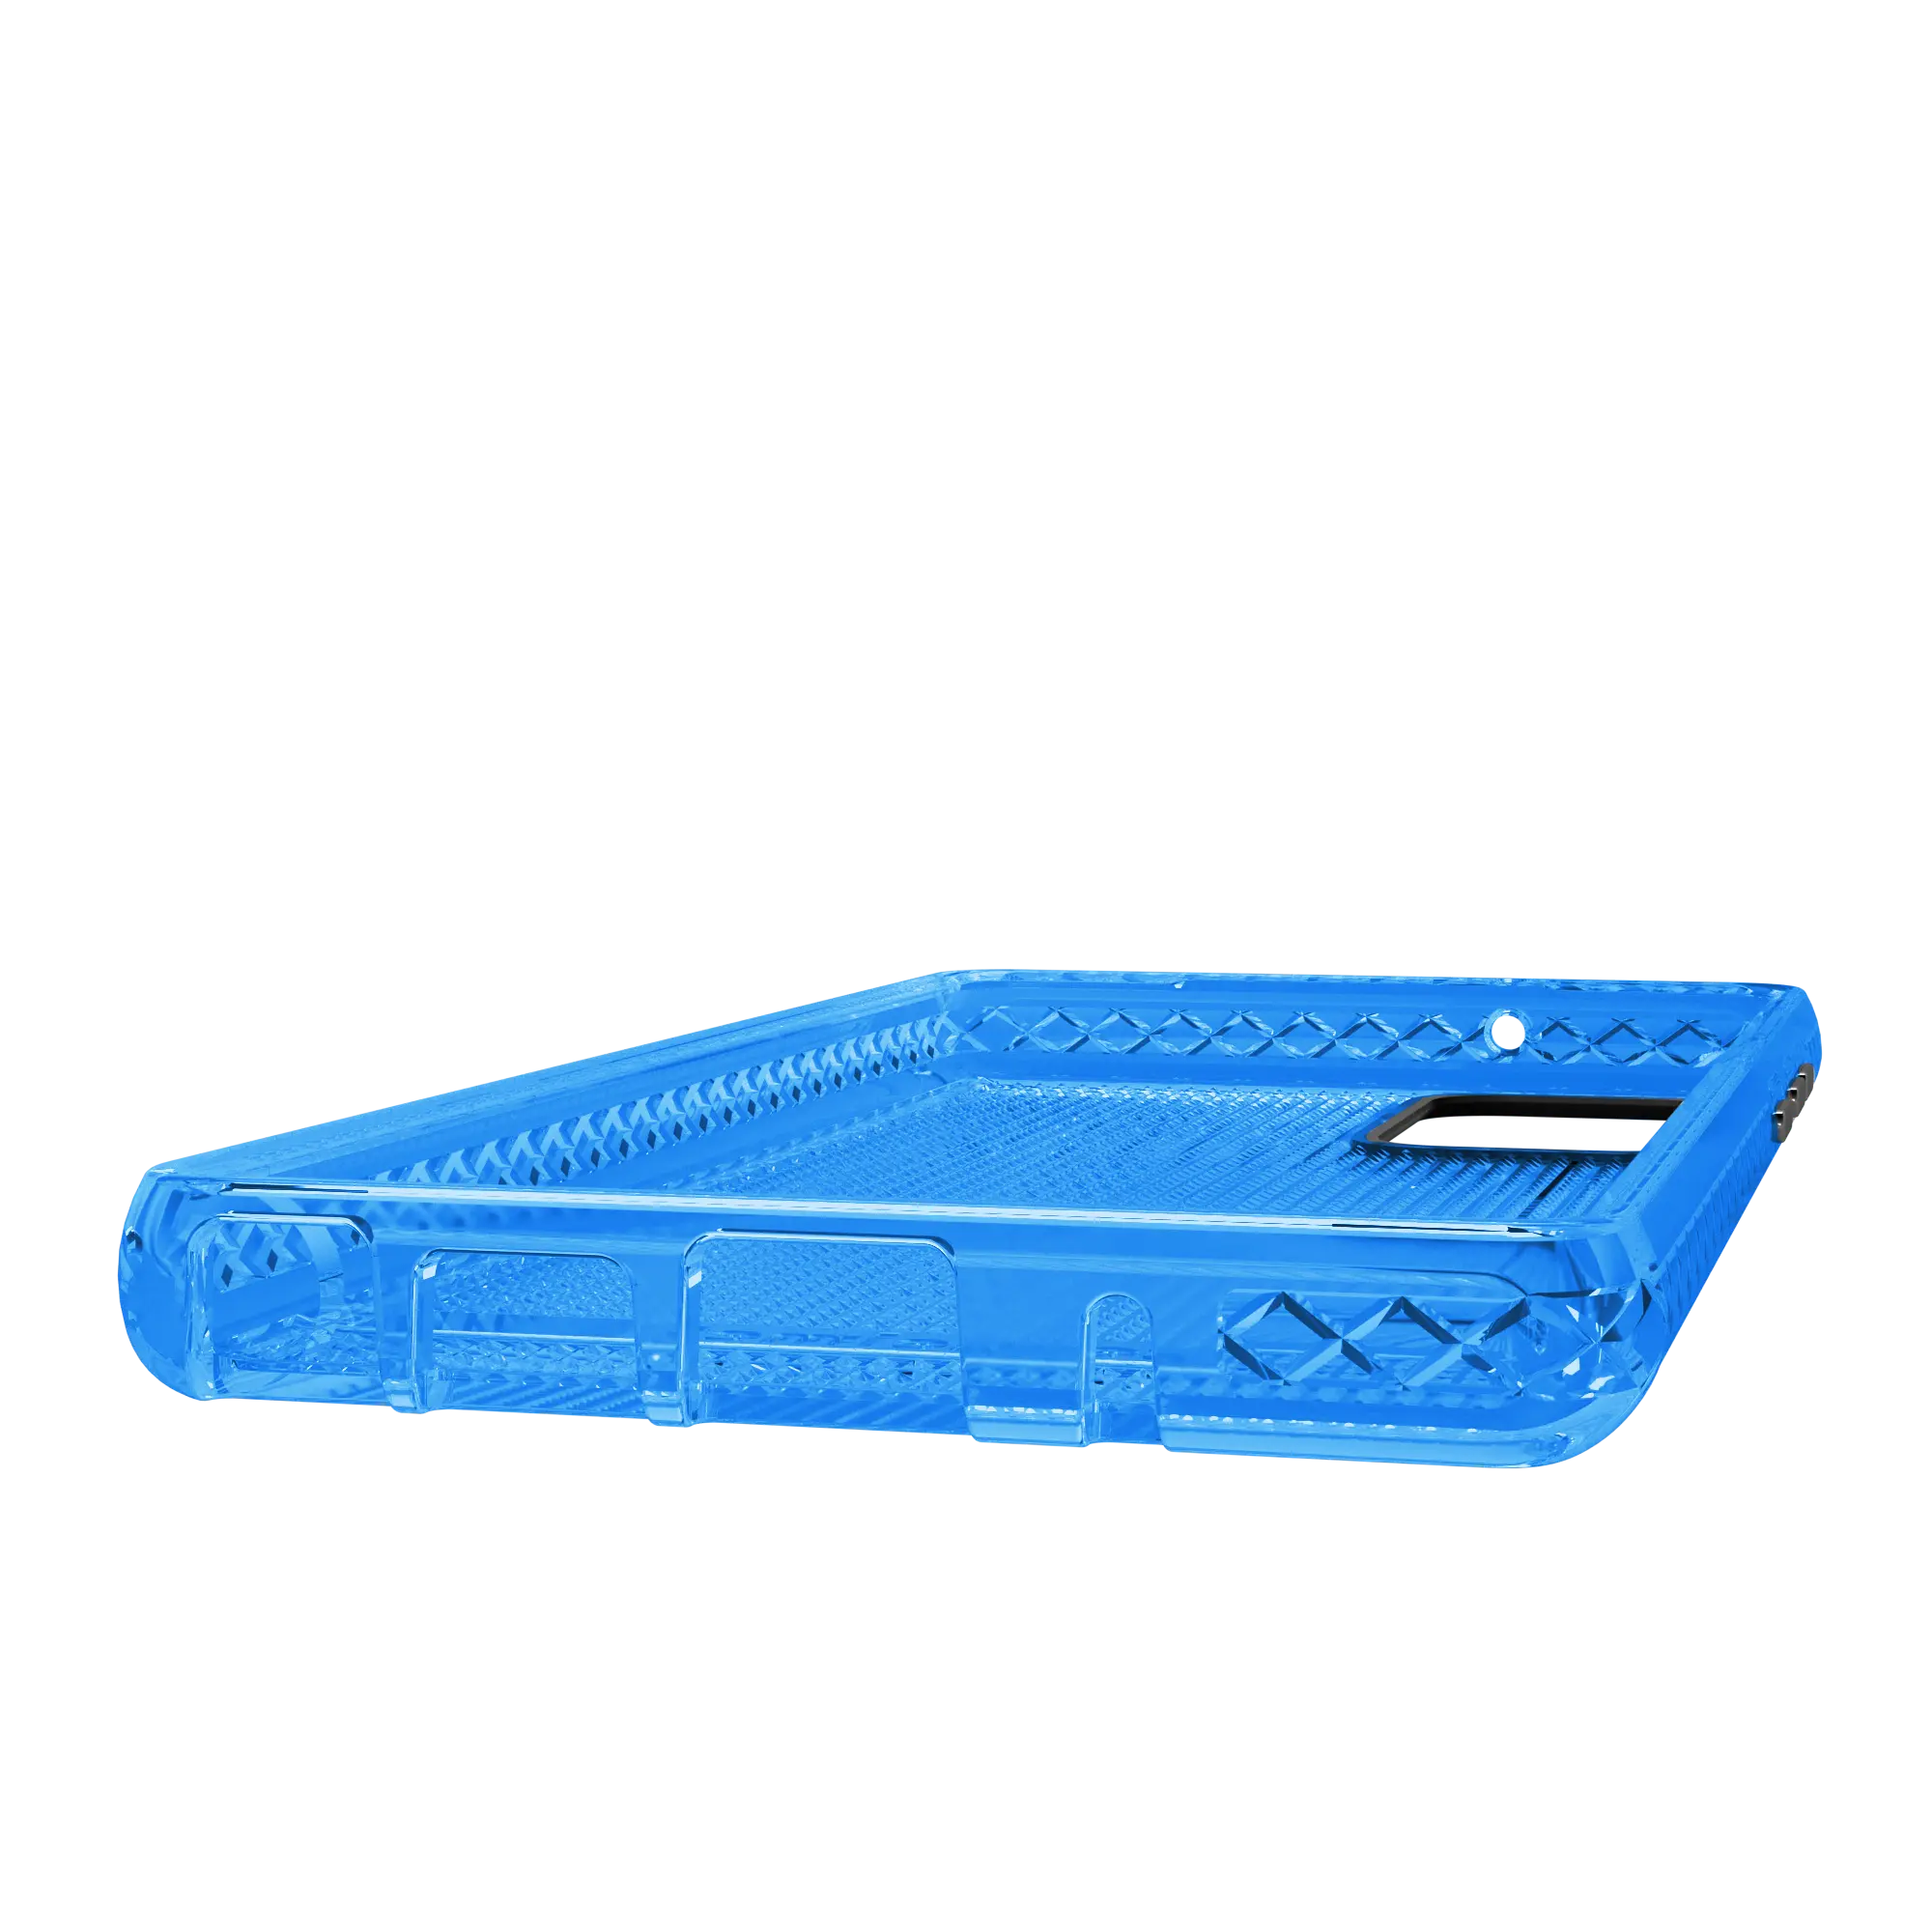 Altitude X Series for Samsung Galaxy Note 20 Ultra 5G  - Blue - Case -  - cellhelmet